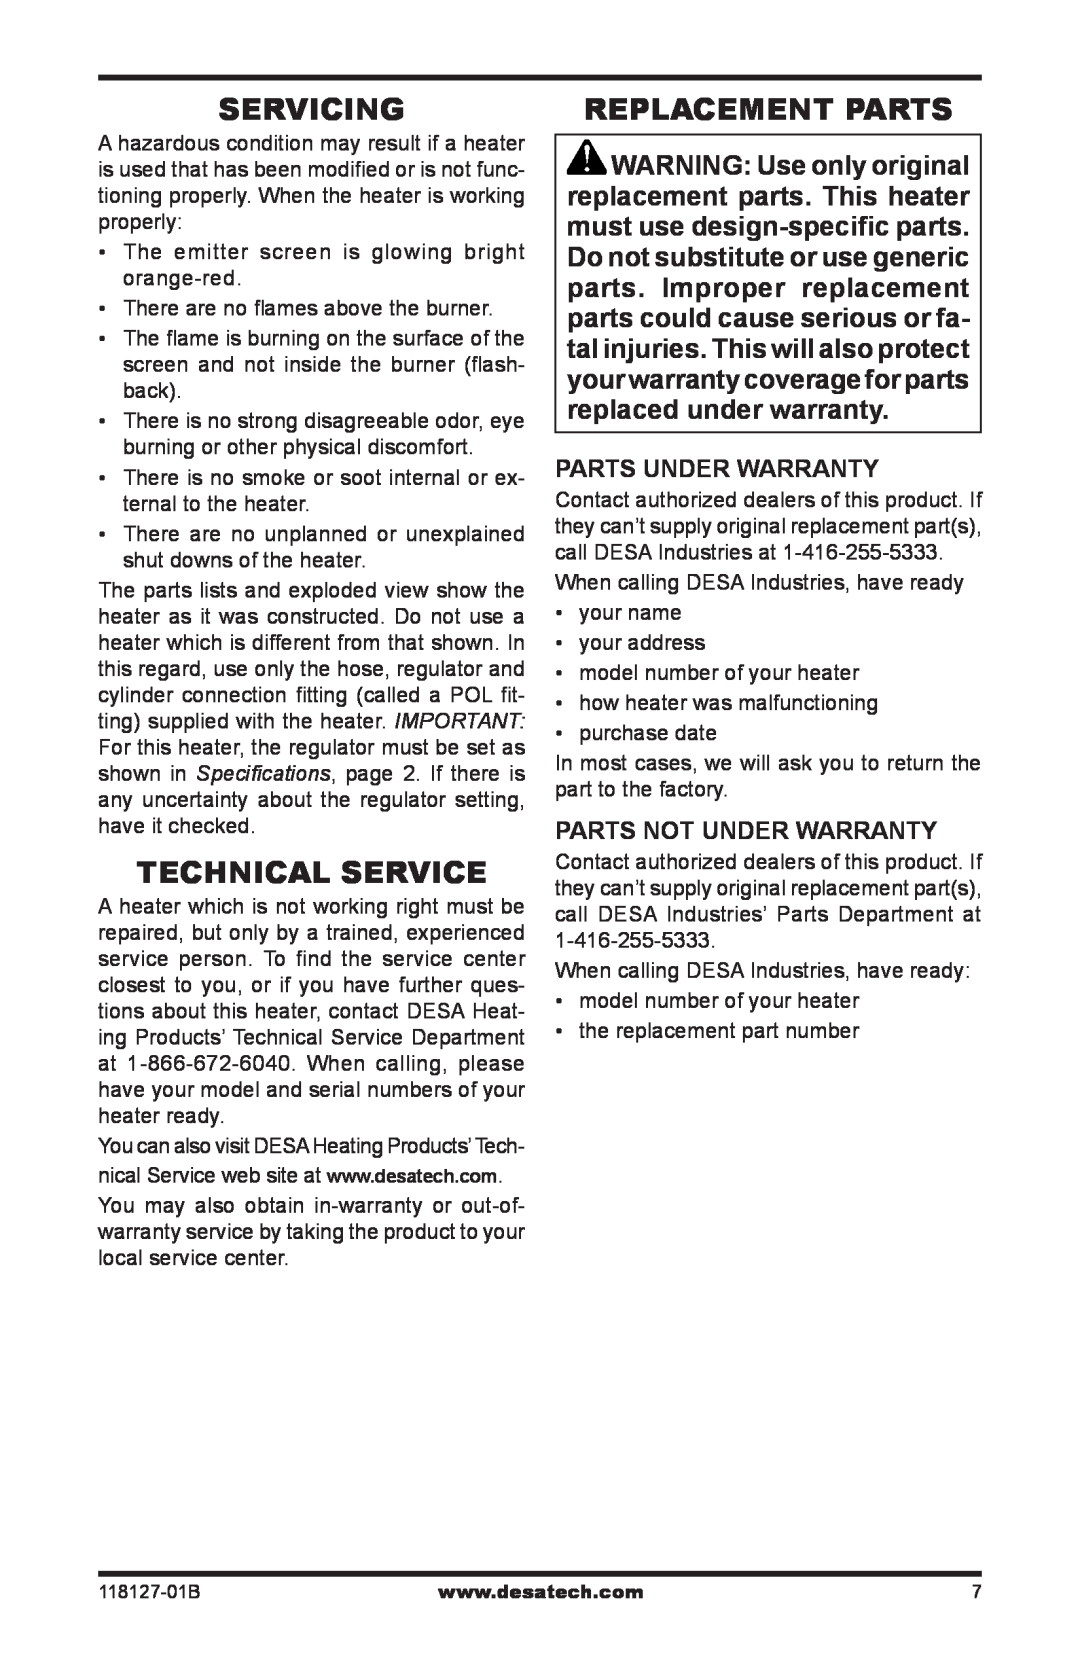 Desa 000-12, TC111 8 Servicing, Technical Service, Replacement Parts, Parts Under Warranty, Parts Not Under Warranty 